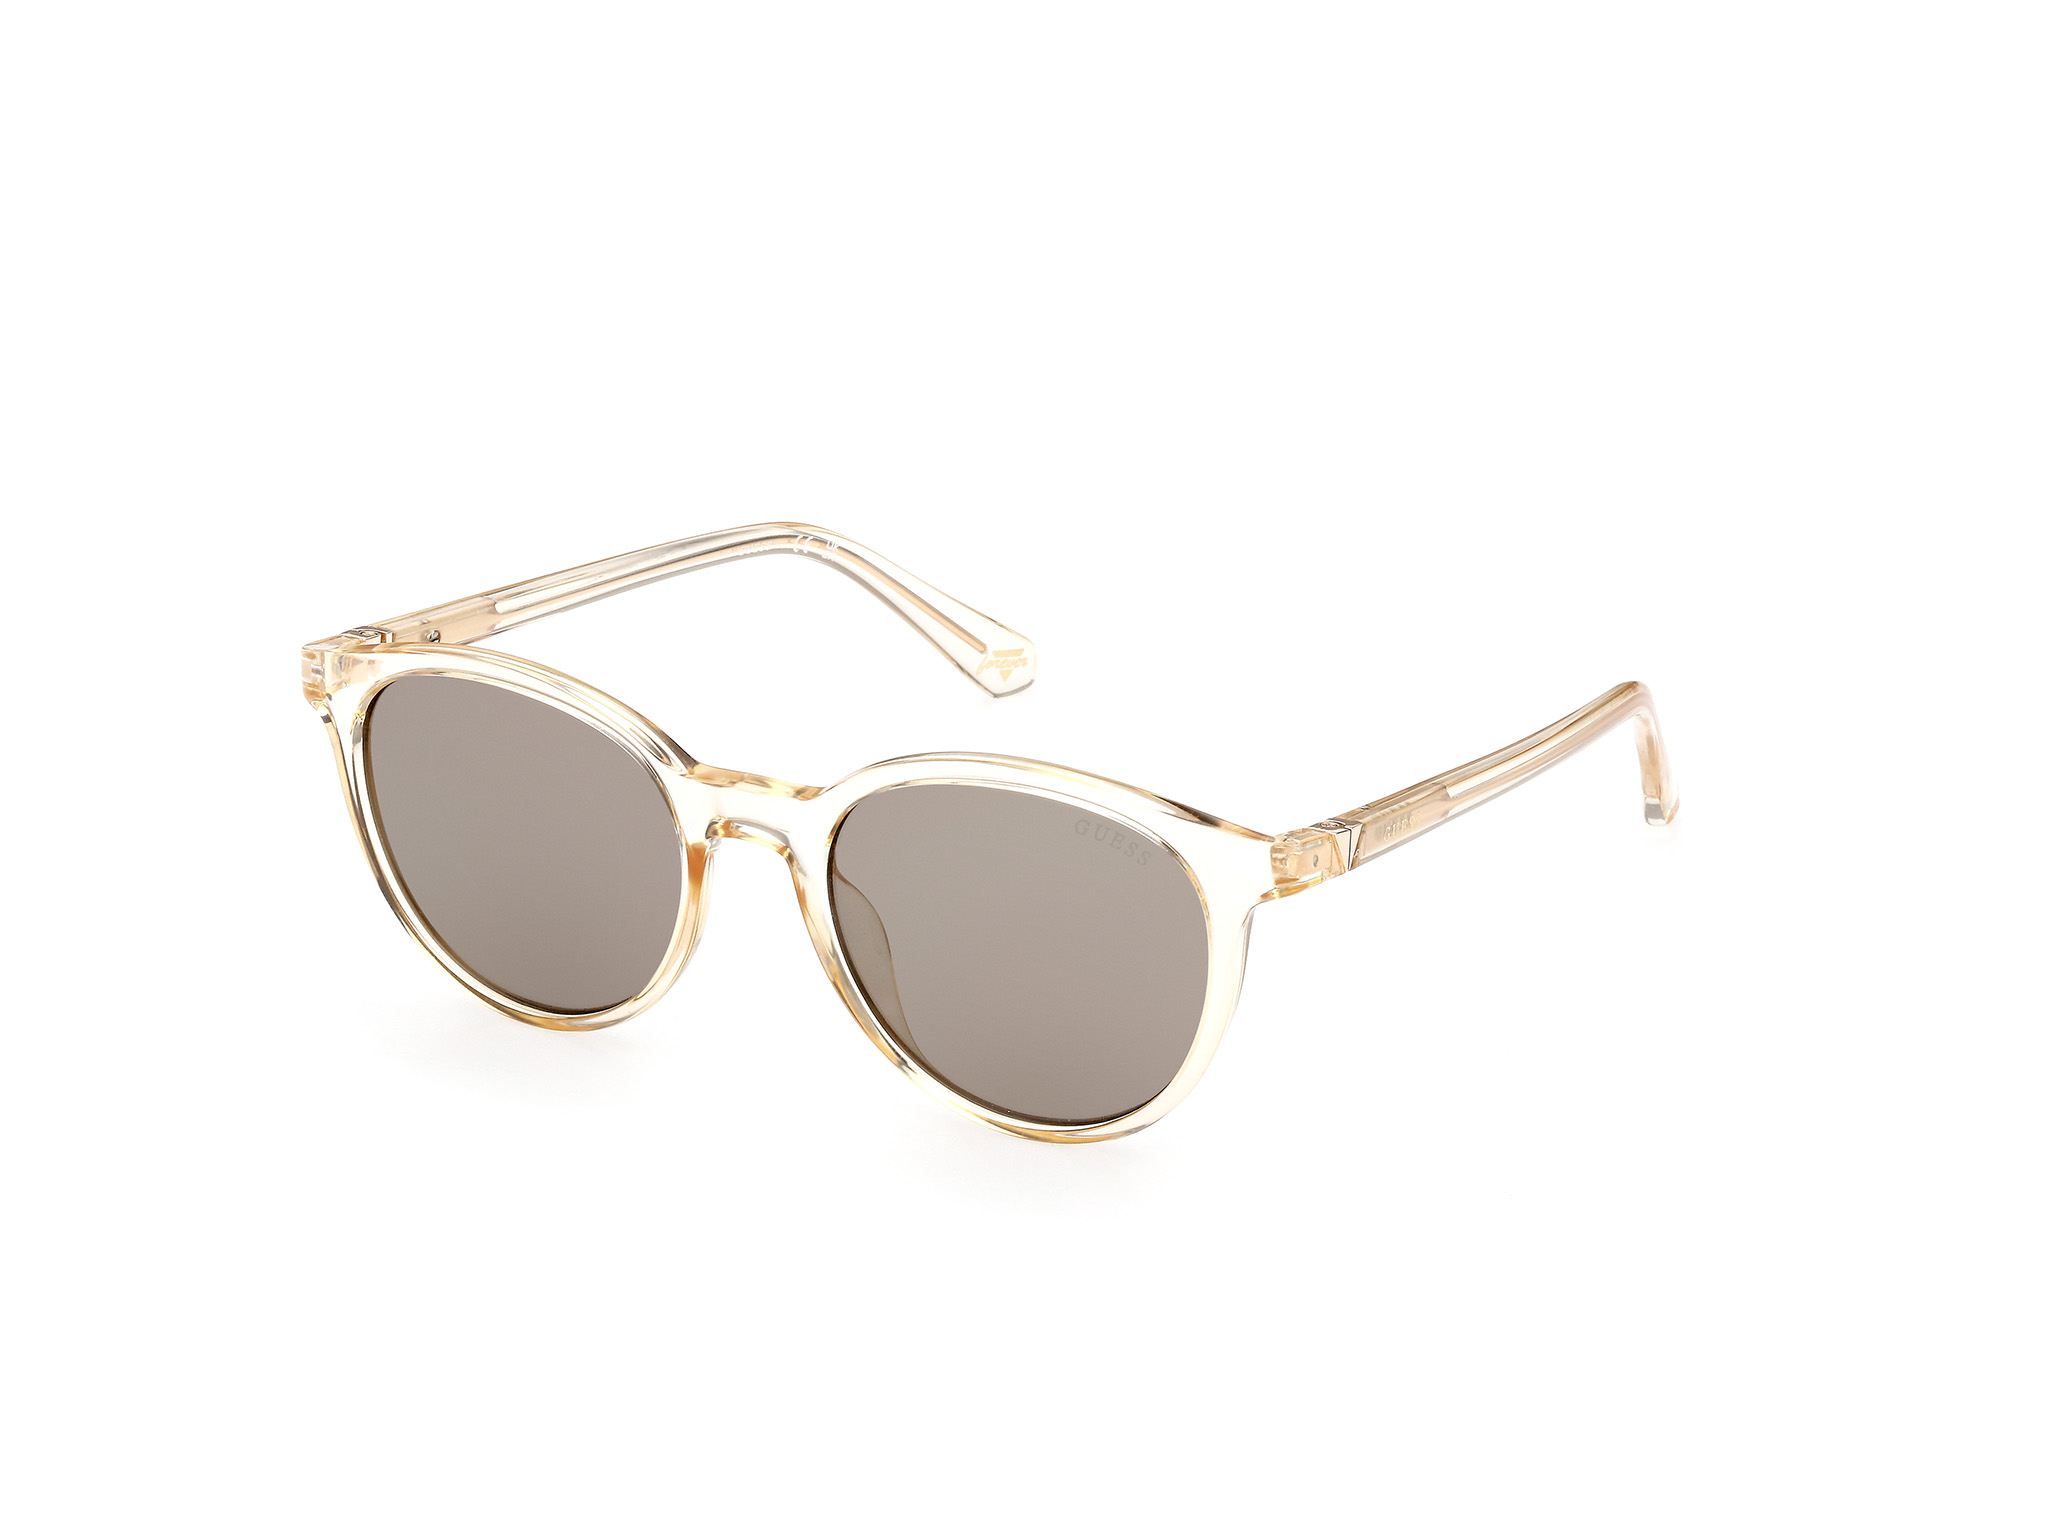 Guess GU 5216 Sunglasses | Guess Sunglasses | Designer Sunglasses